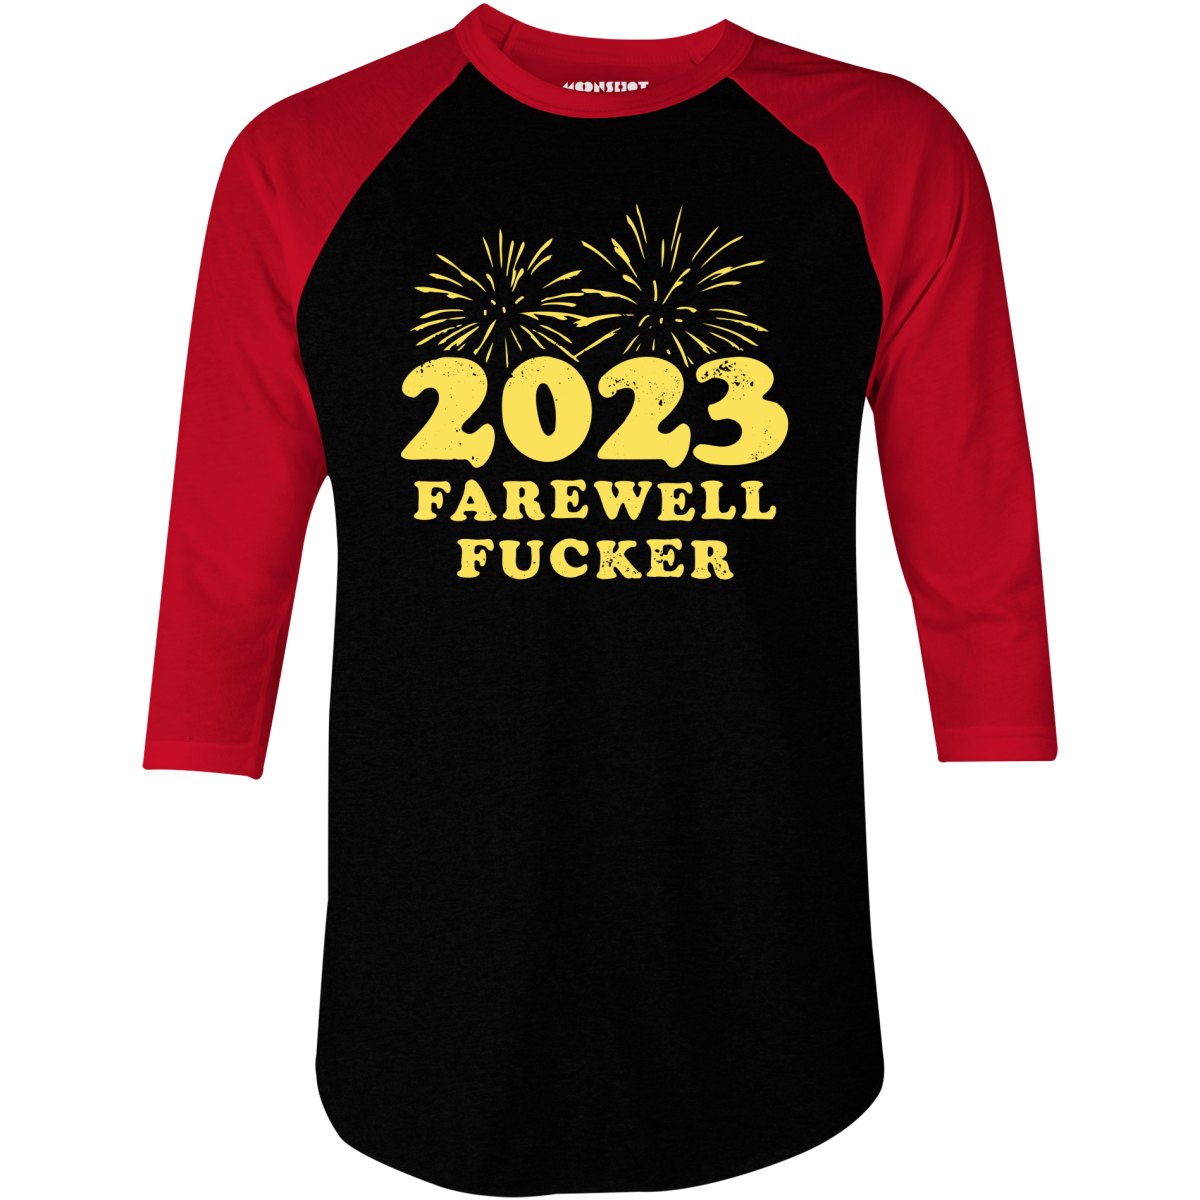 2023 Farewell Fucker - 3/4 Sleeve Raglan T-Shirt